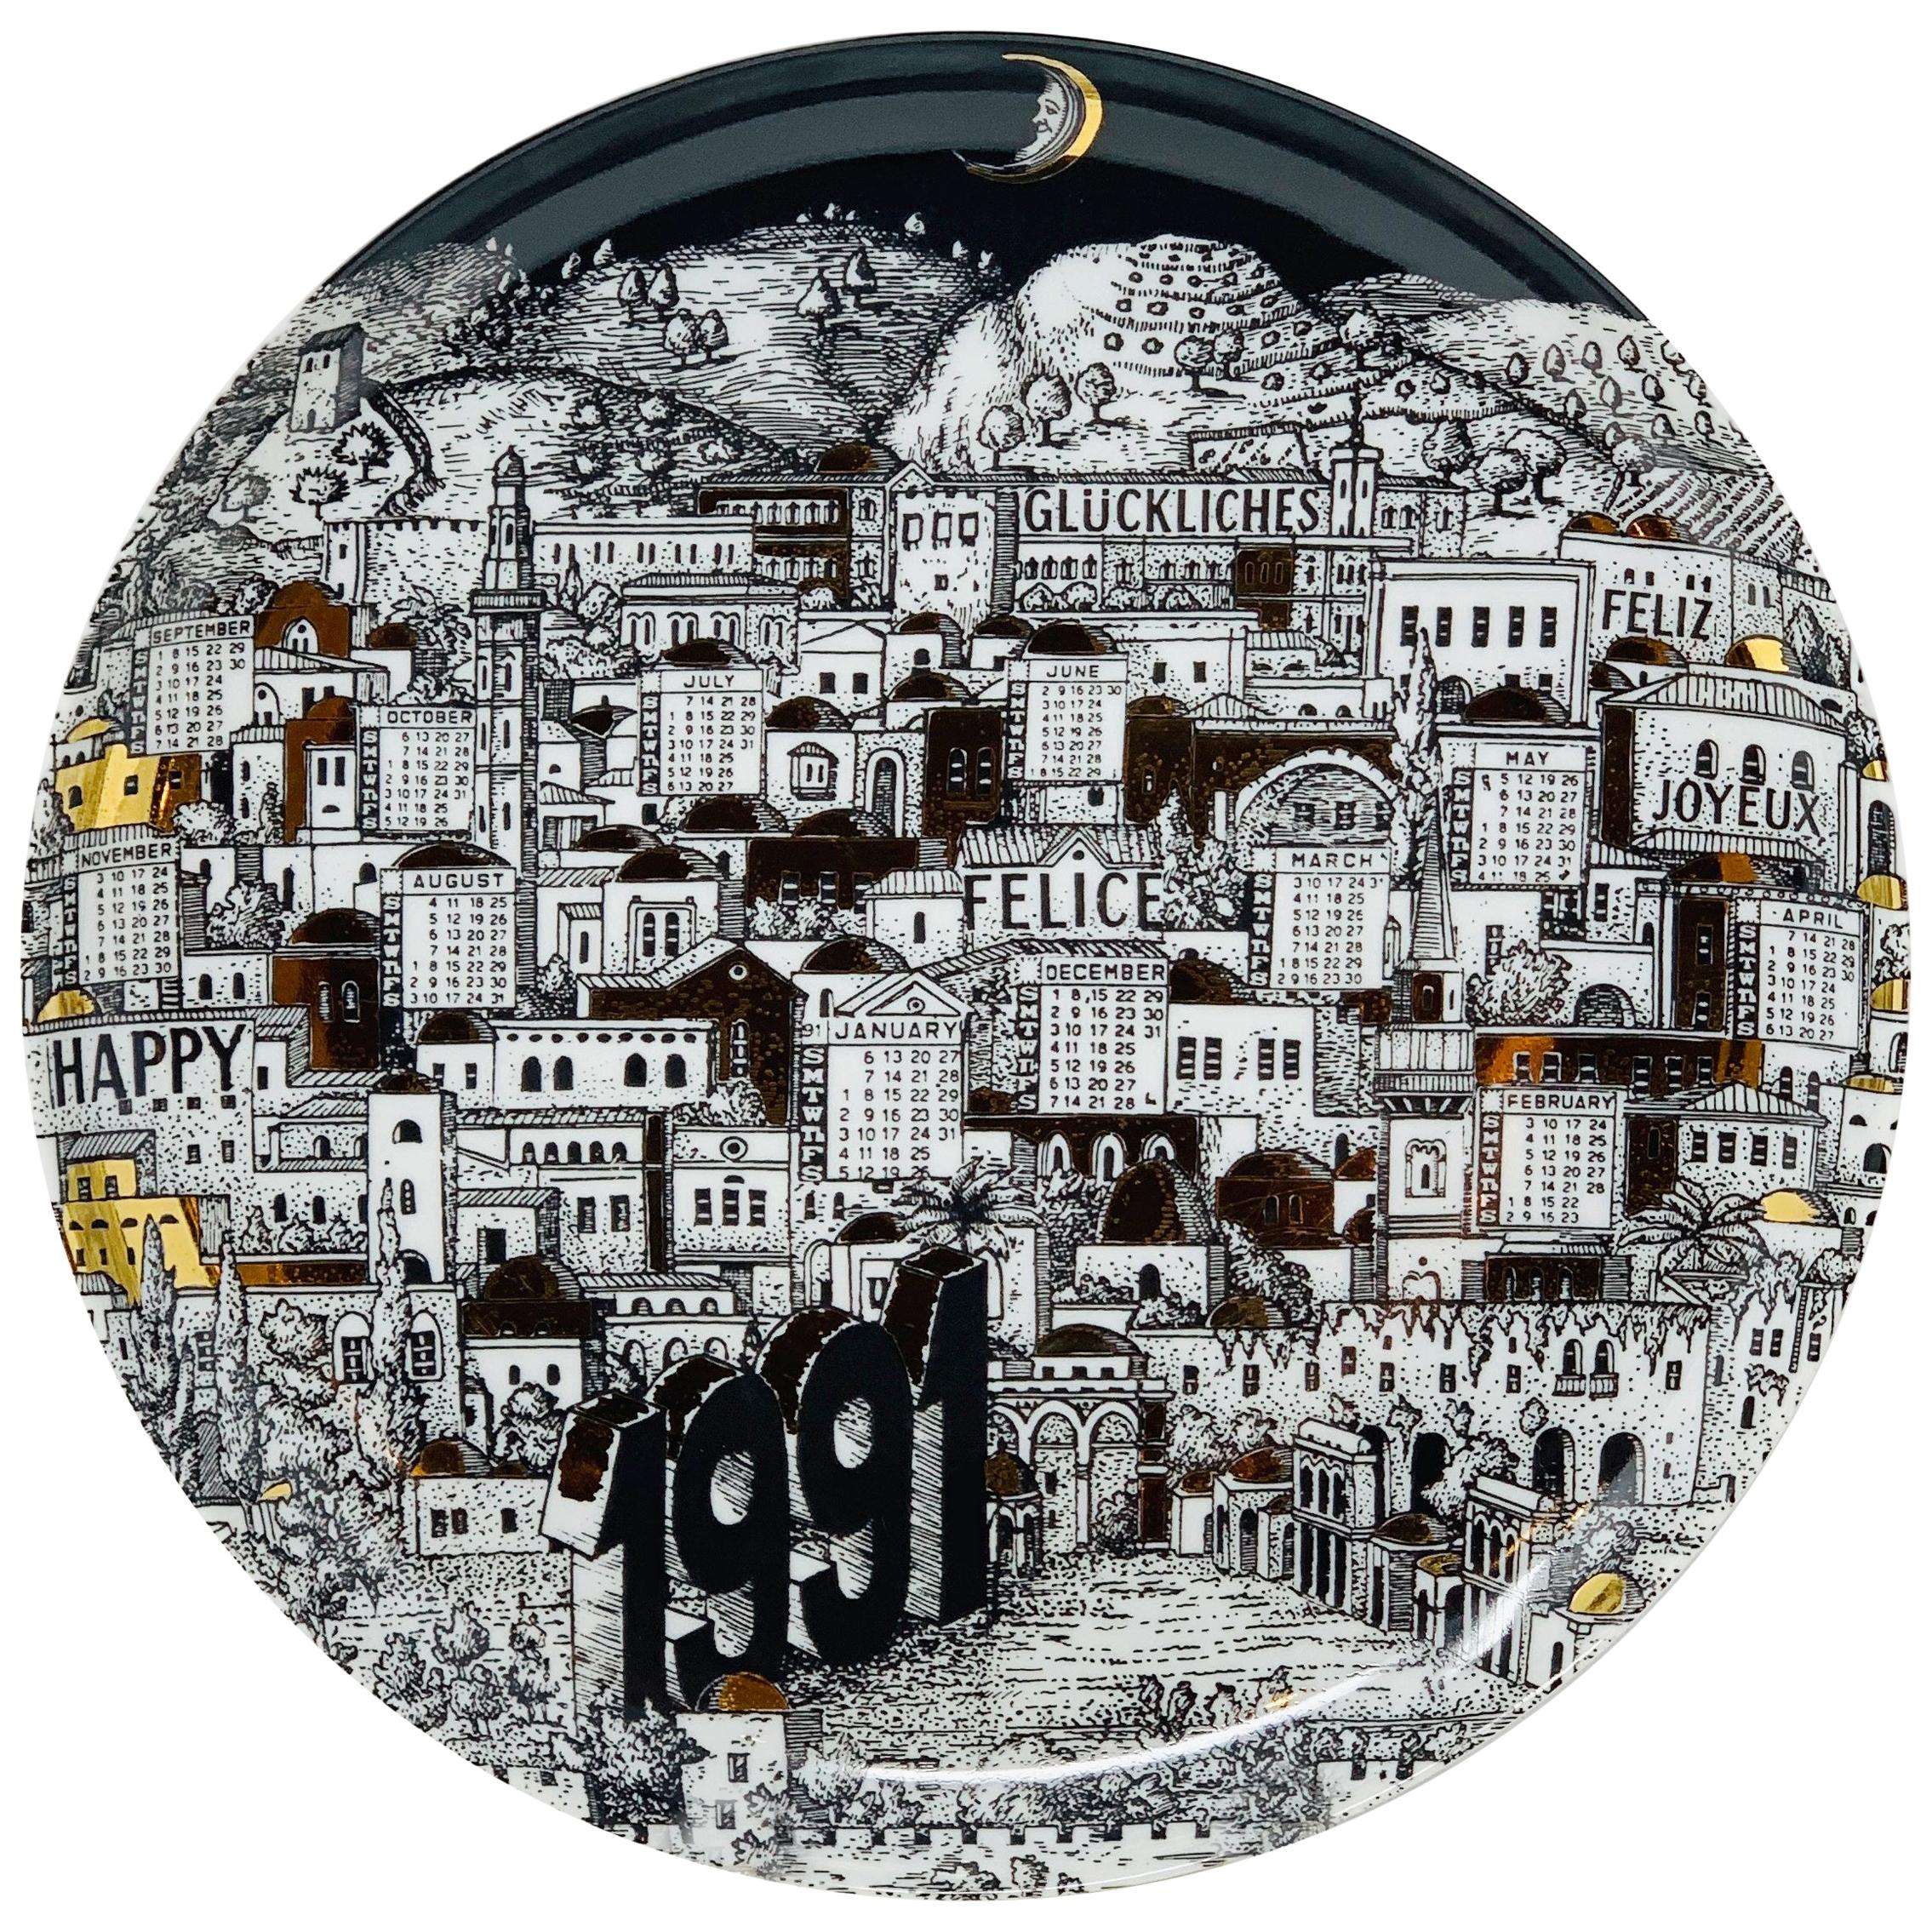  Piero Fornasetti Calendar Porcelain Plate for the Year 1991